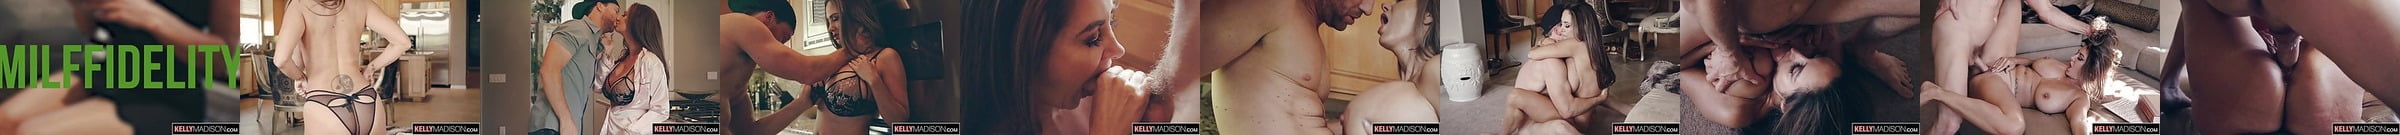 Pornfidelity Kelly Madison S Cock Milking Morning